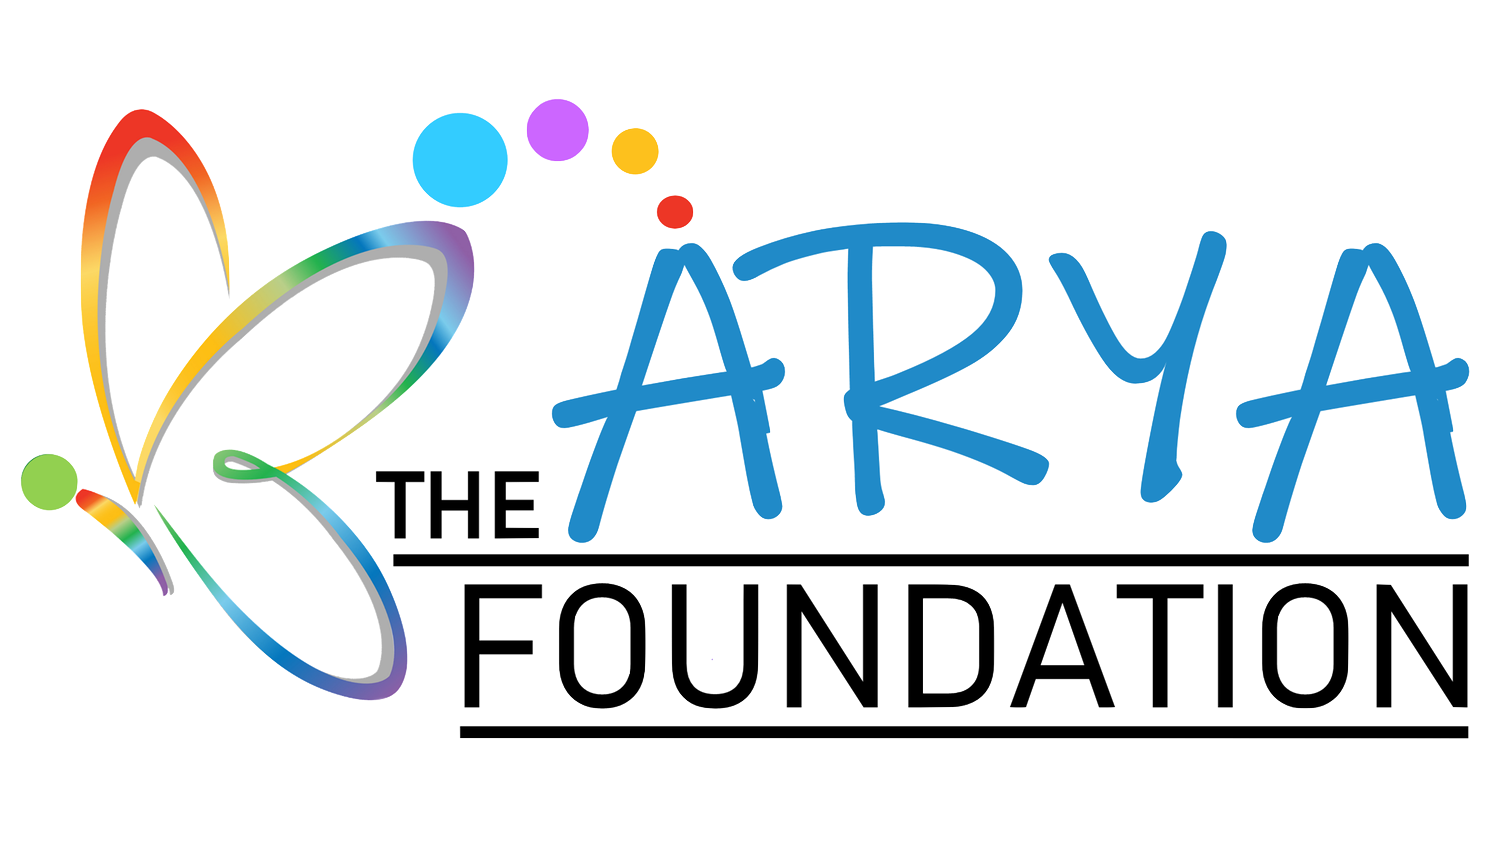 The Arya Foundation